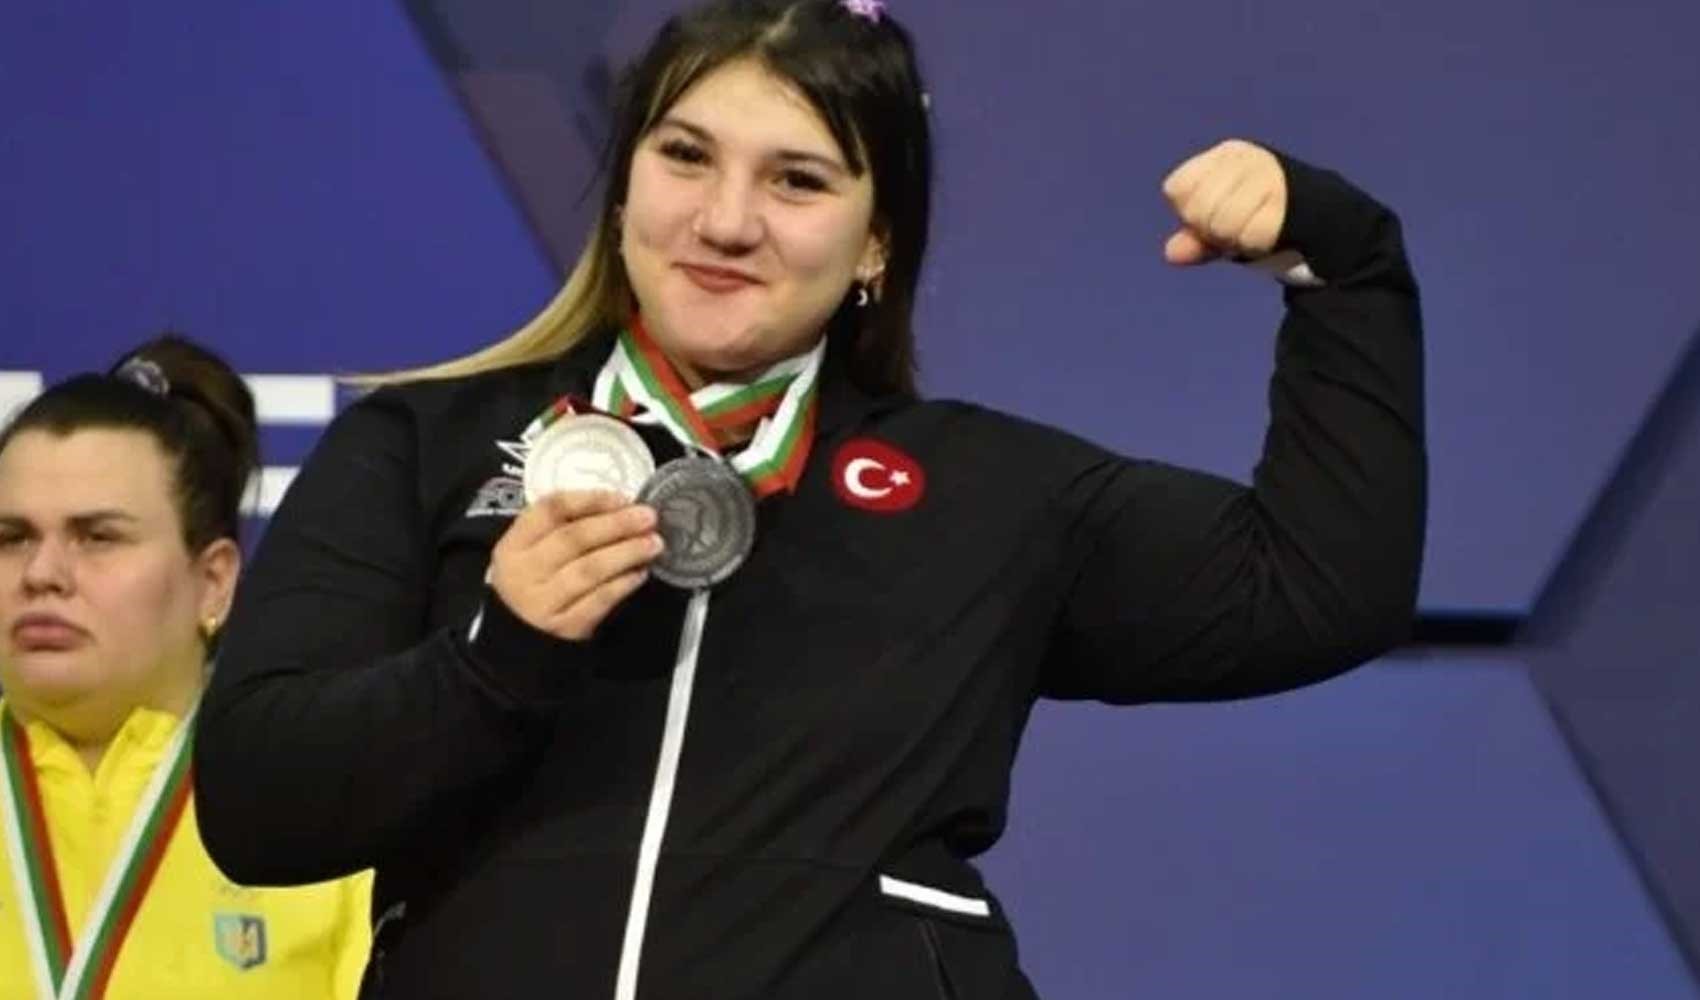 Milli halterci Fatmagül Çevik'ten 2 bronz madalya